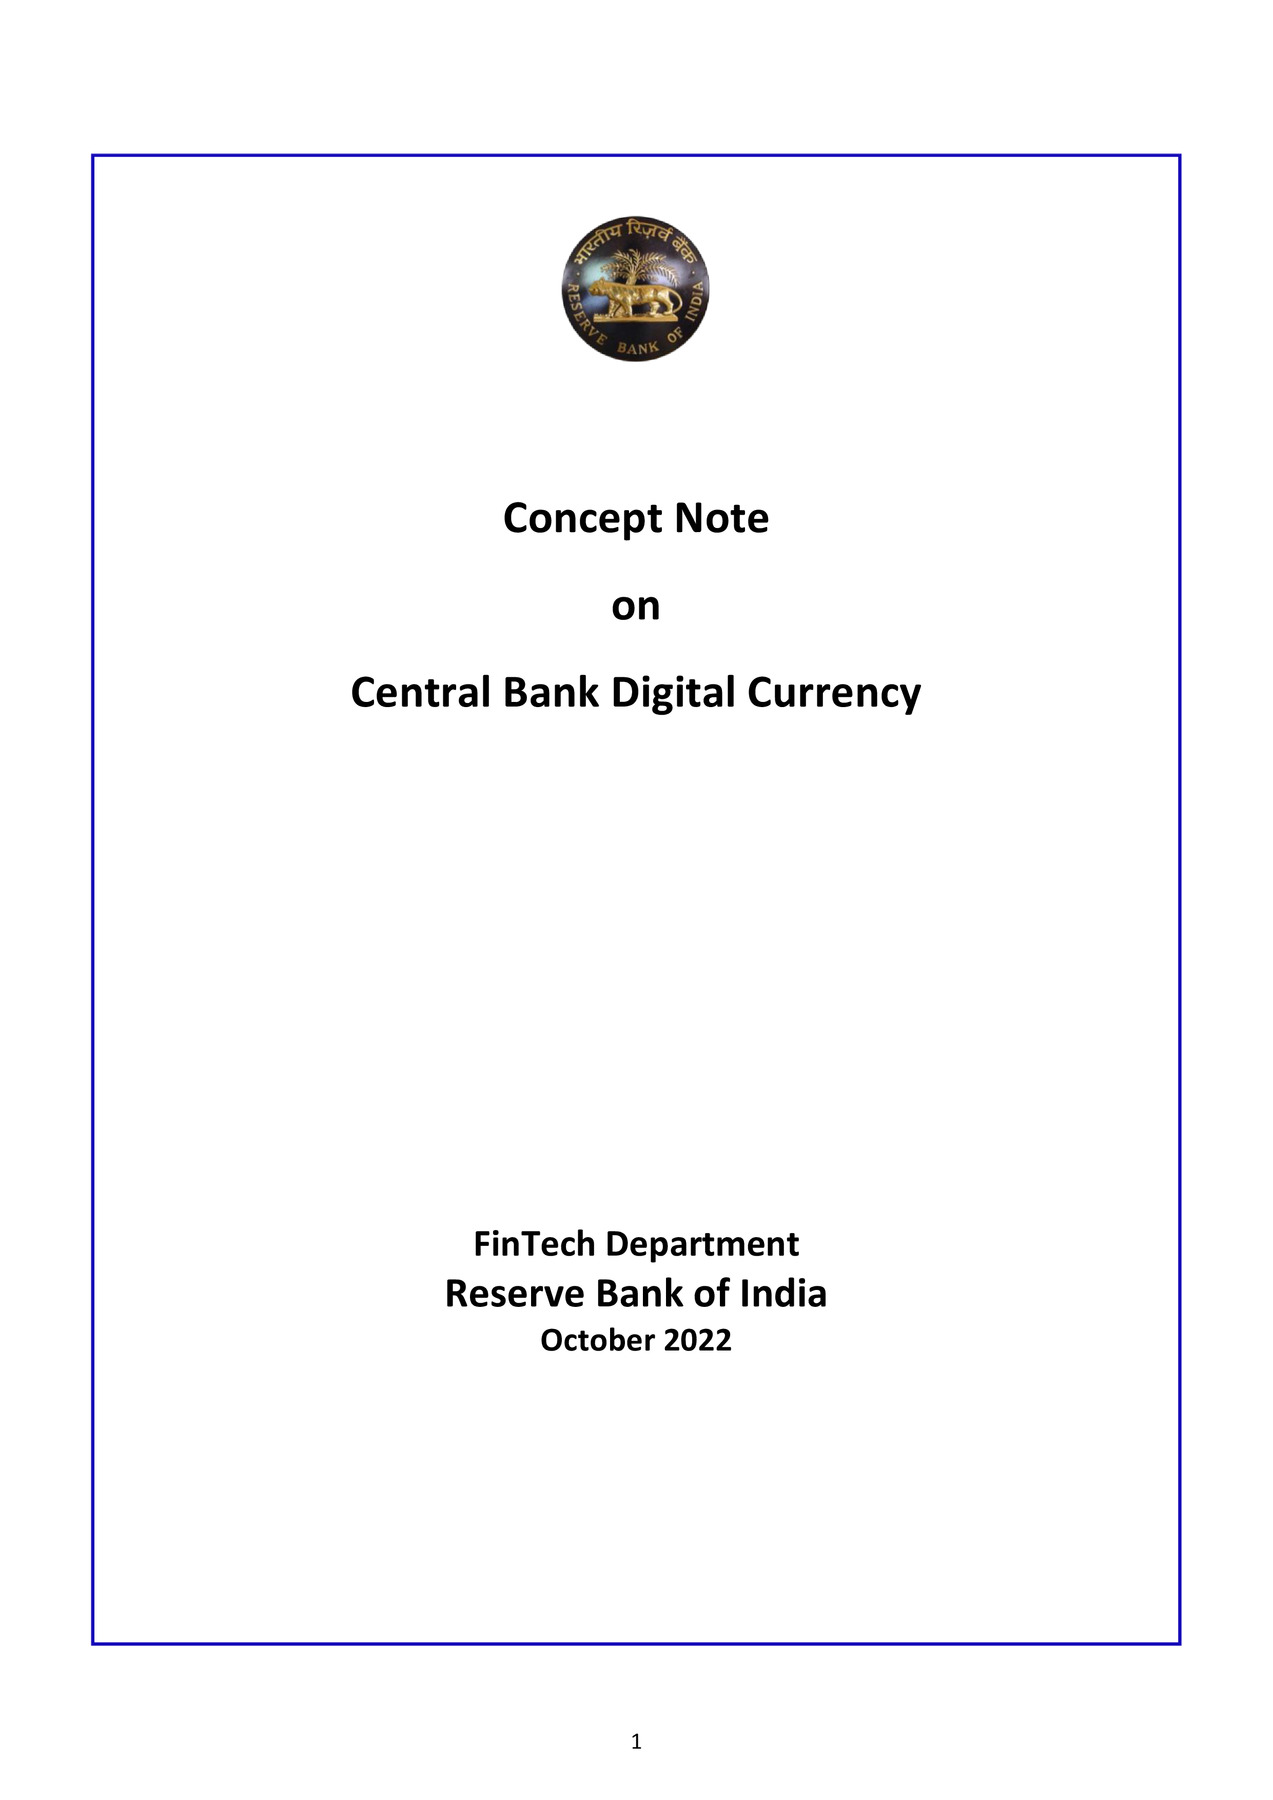 RBI Digital Currency (CBDC) Concept Note PDF